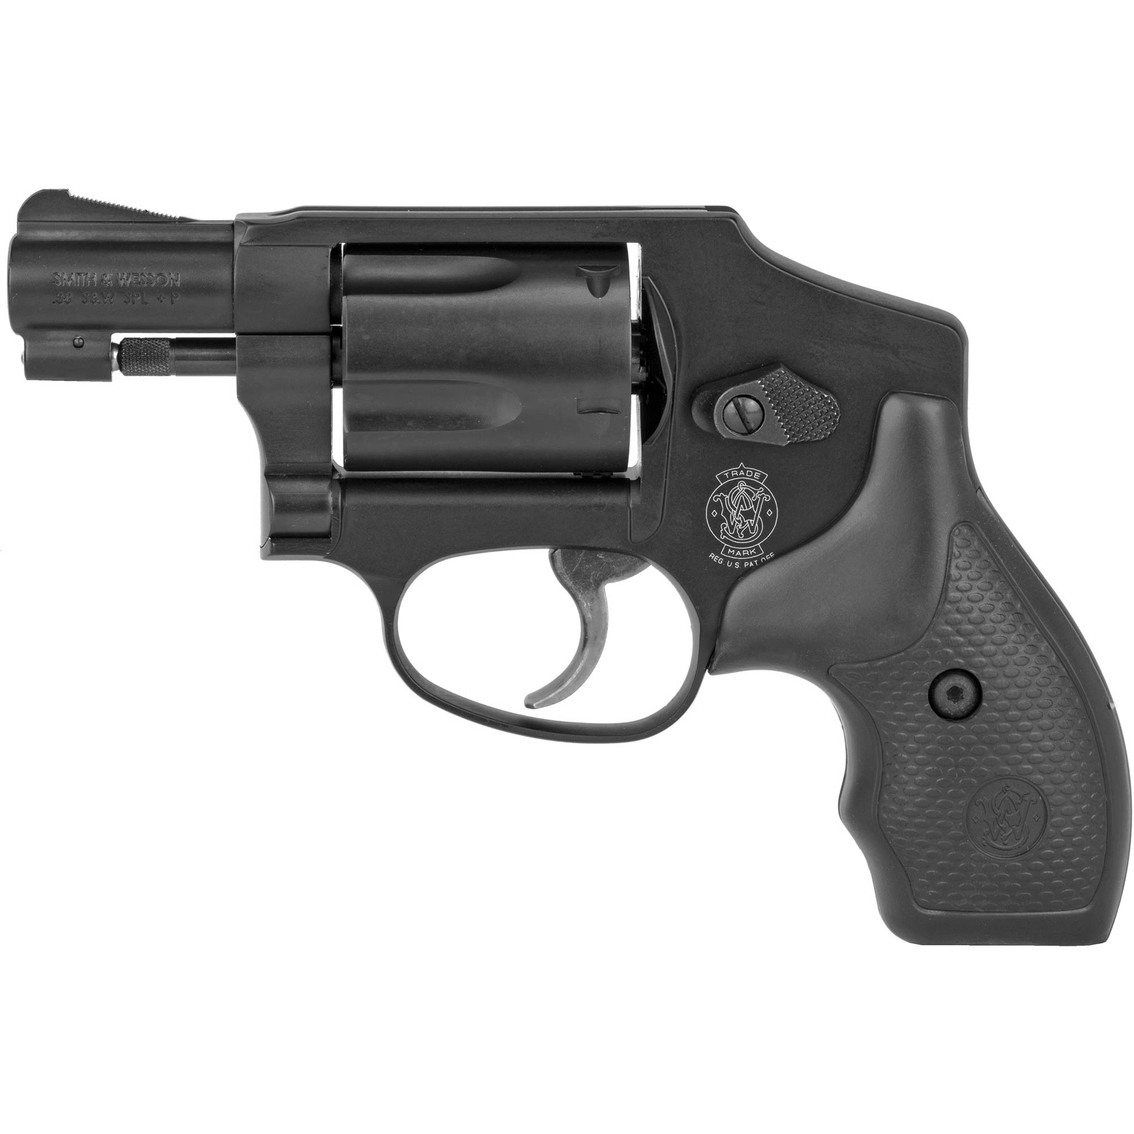 S&W 442 38 Special 1.875 in. Barrel 5 Rds Revolver Black - Image 2 of 3